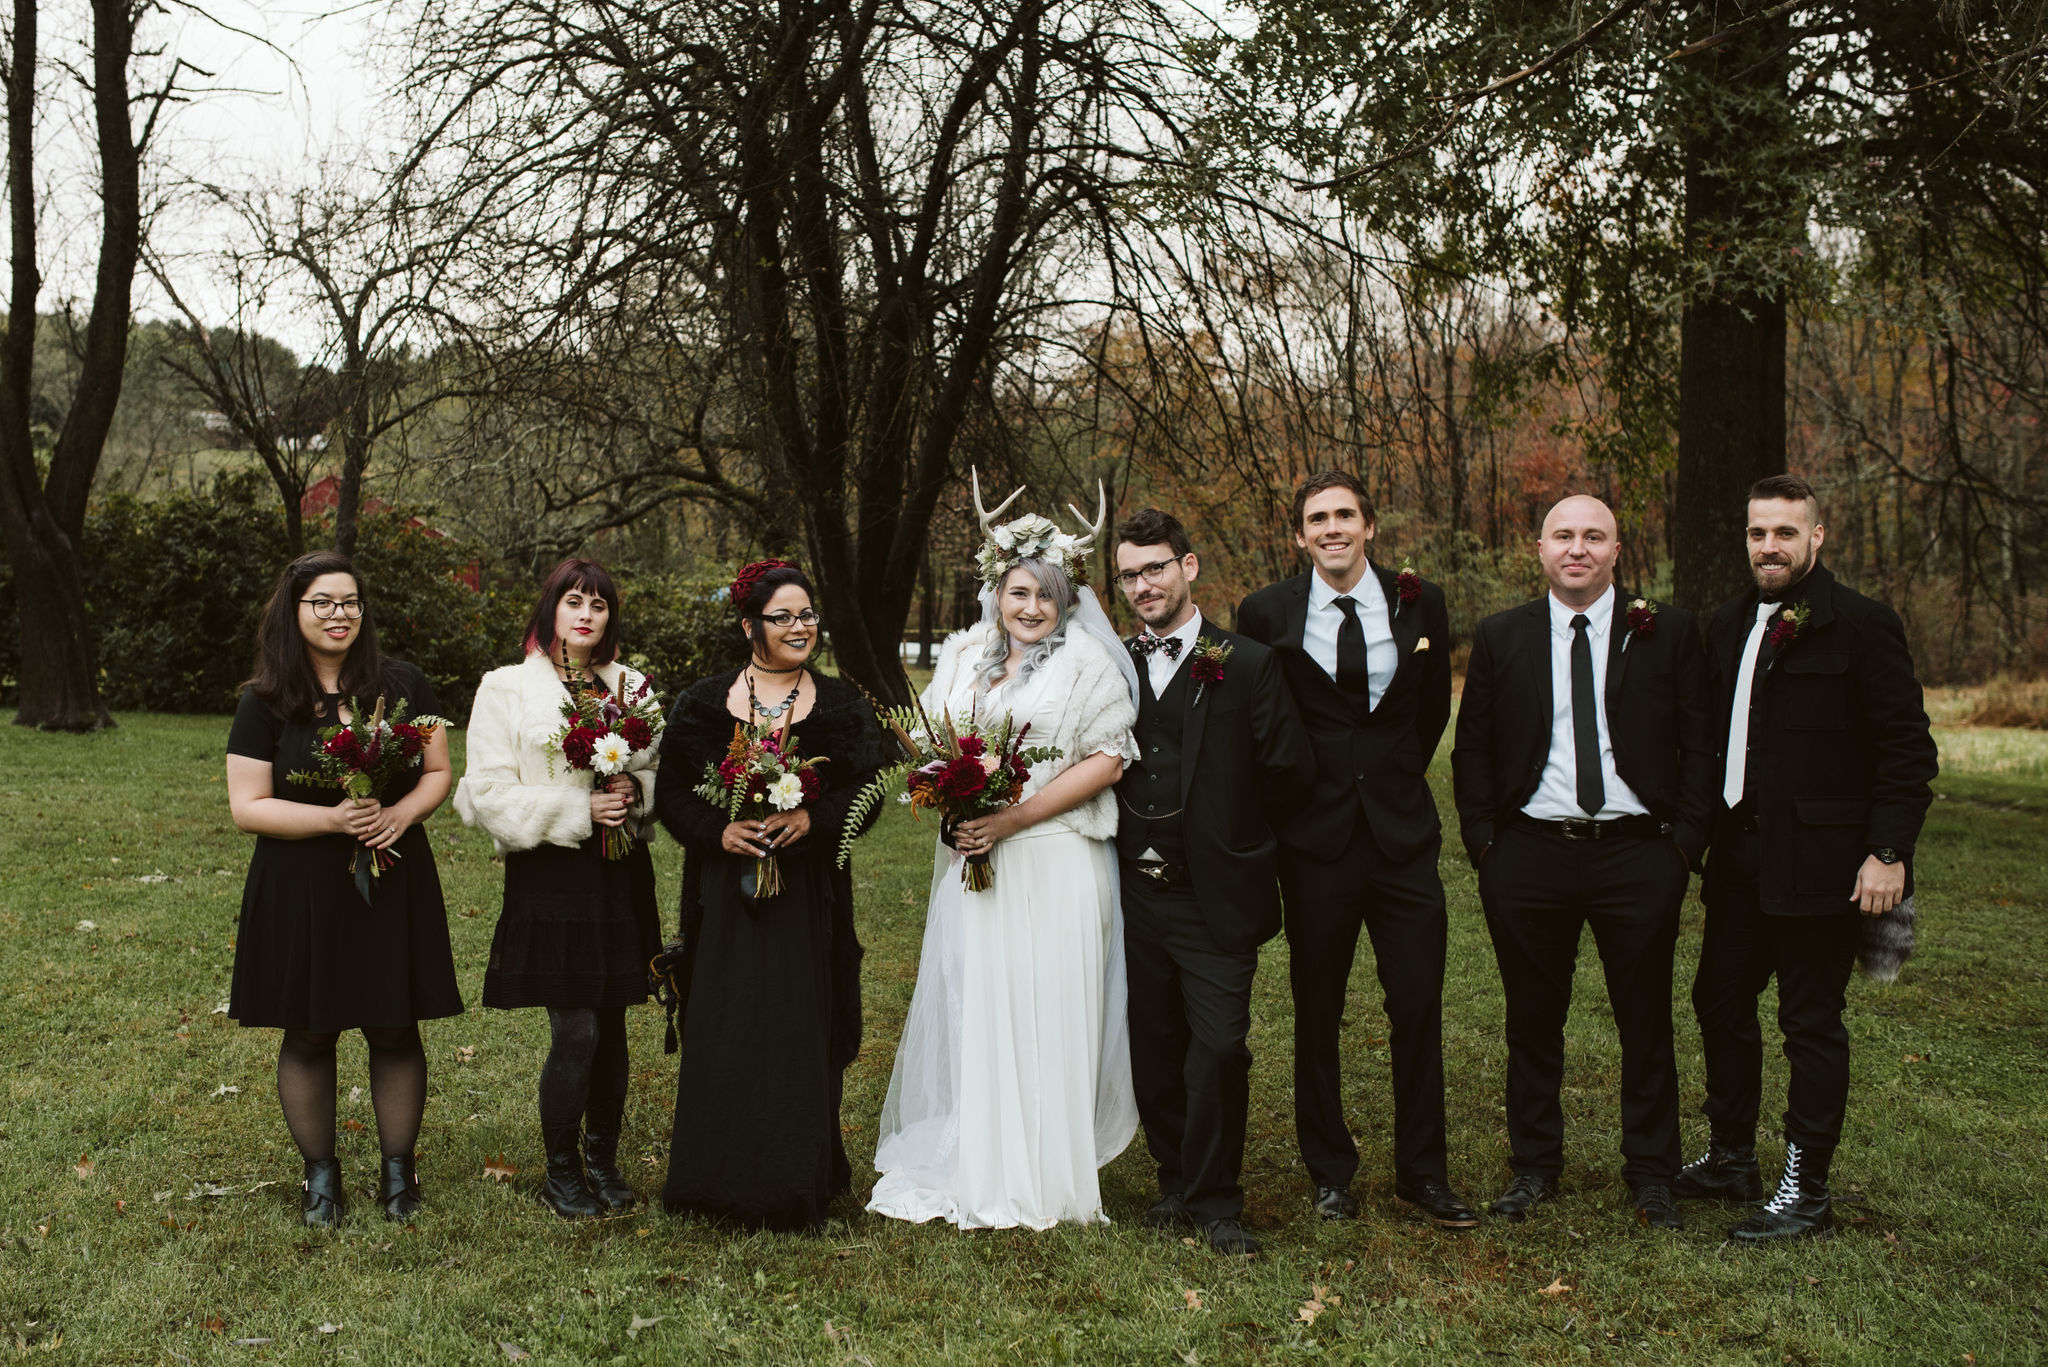  Maryland, Baltimore Wedding Photographer, Backyard Wedding, Fall, October, Dark Bohemian, Whimsical, Fun, Portrait of Wedding Party, The Modest Florist, Black Bridesmaids Dresses,  